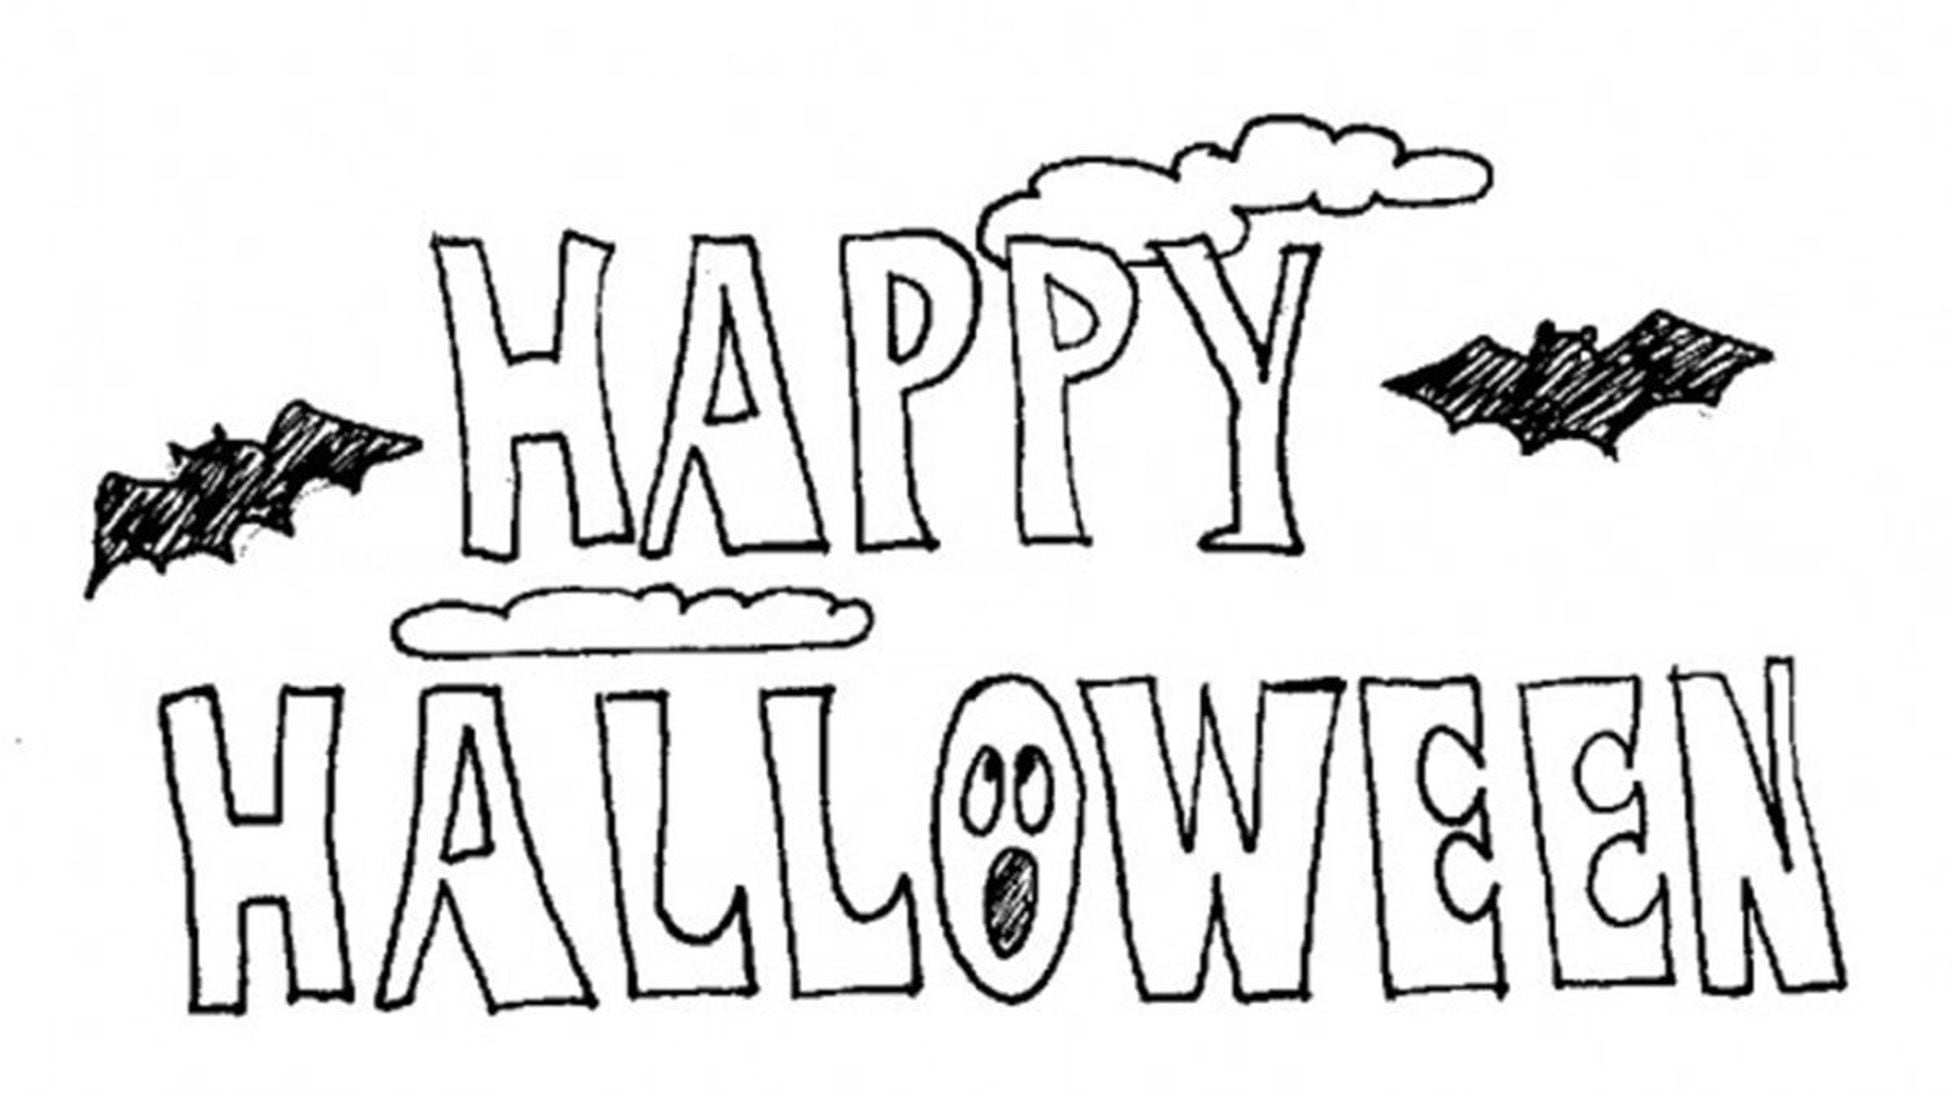 Halloween para niños | Los mejores dibujos e imágenes para imprimir:  murciélagos, vampiros.. Los mejores dibujos e imágenes para imprimir:  murciélagos, vampiros.. - Tikitakas